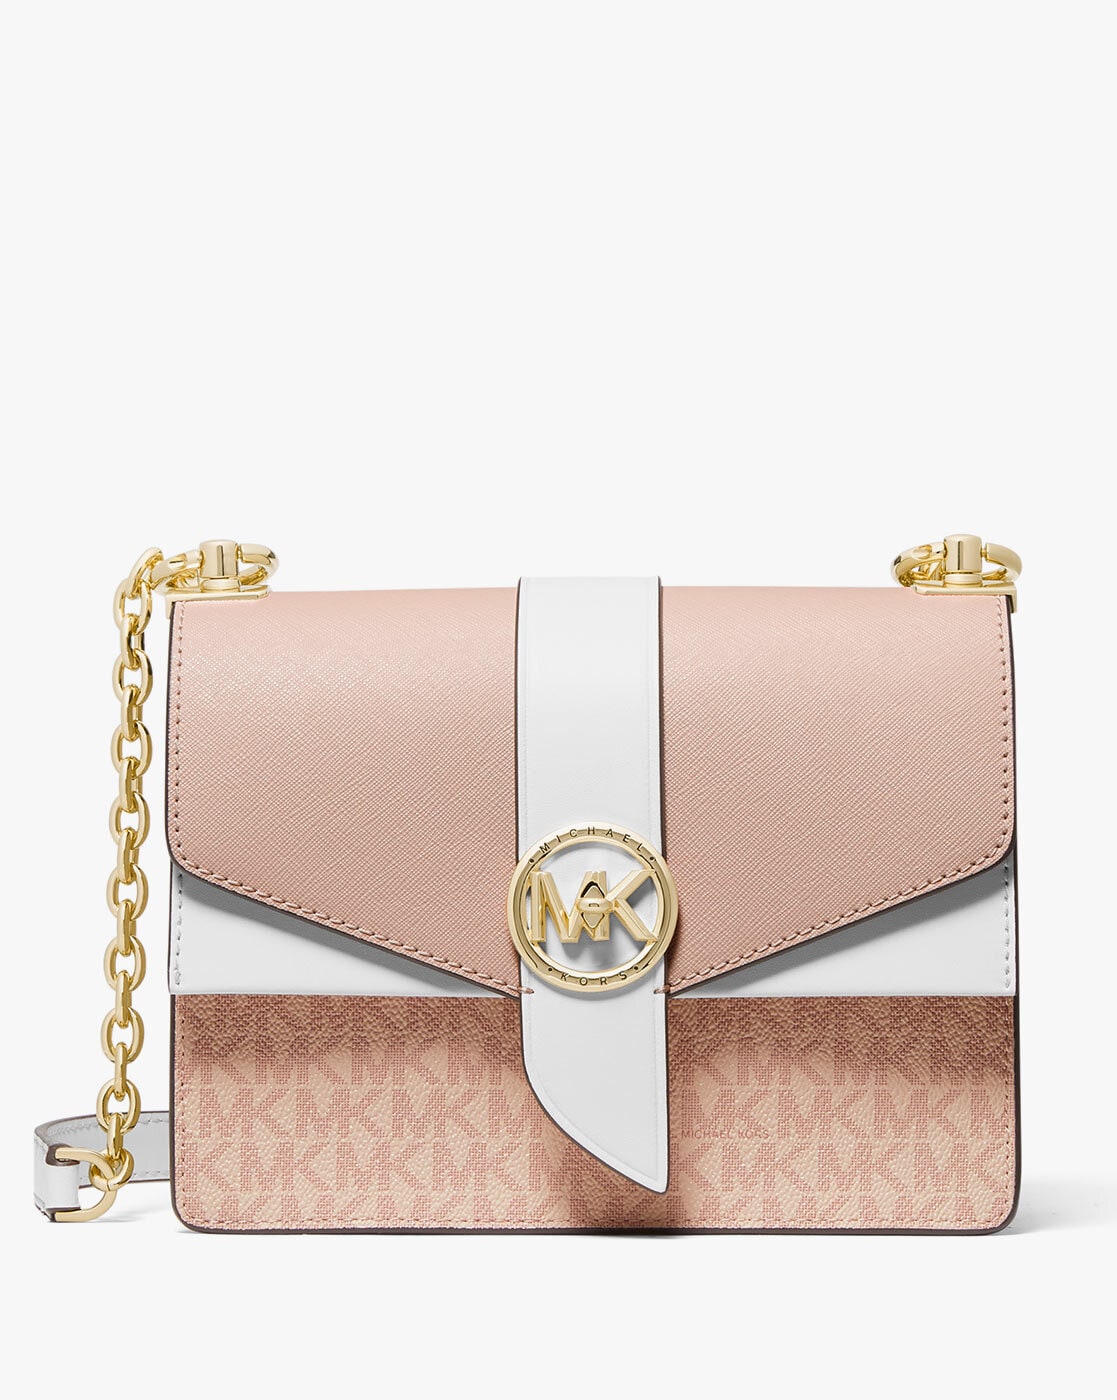 Buy Pink Handbags for Women by Michael Kors Online 